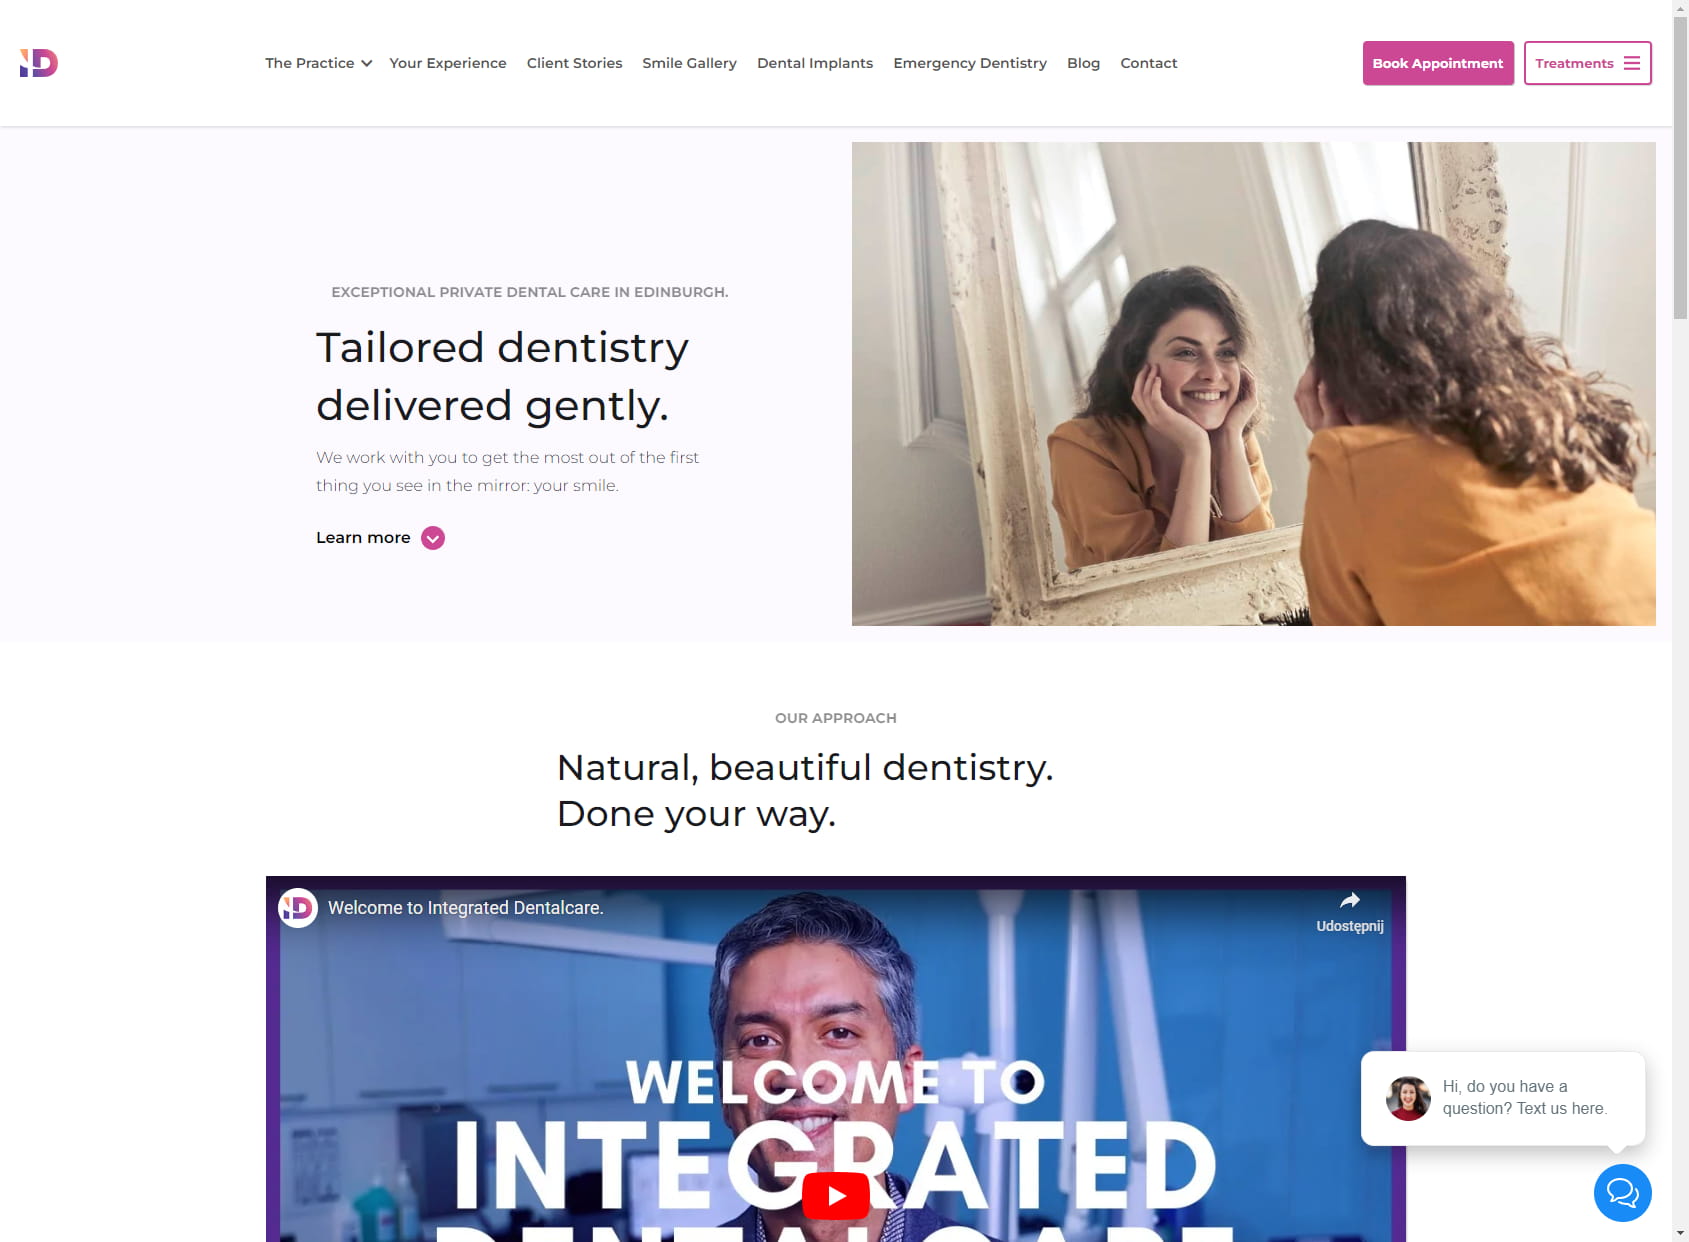 Integrated Dentalcare